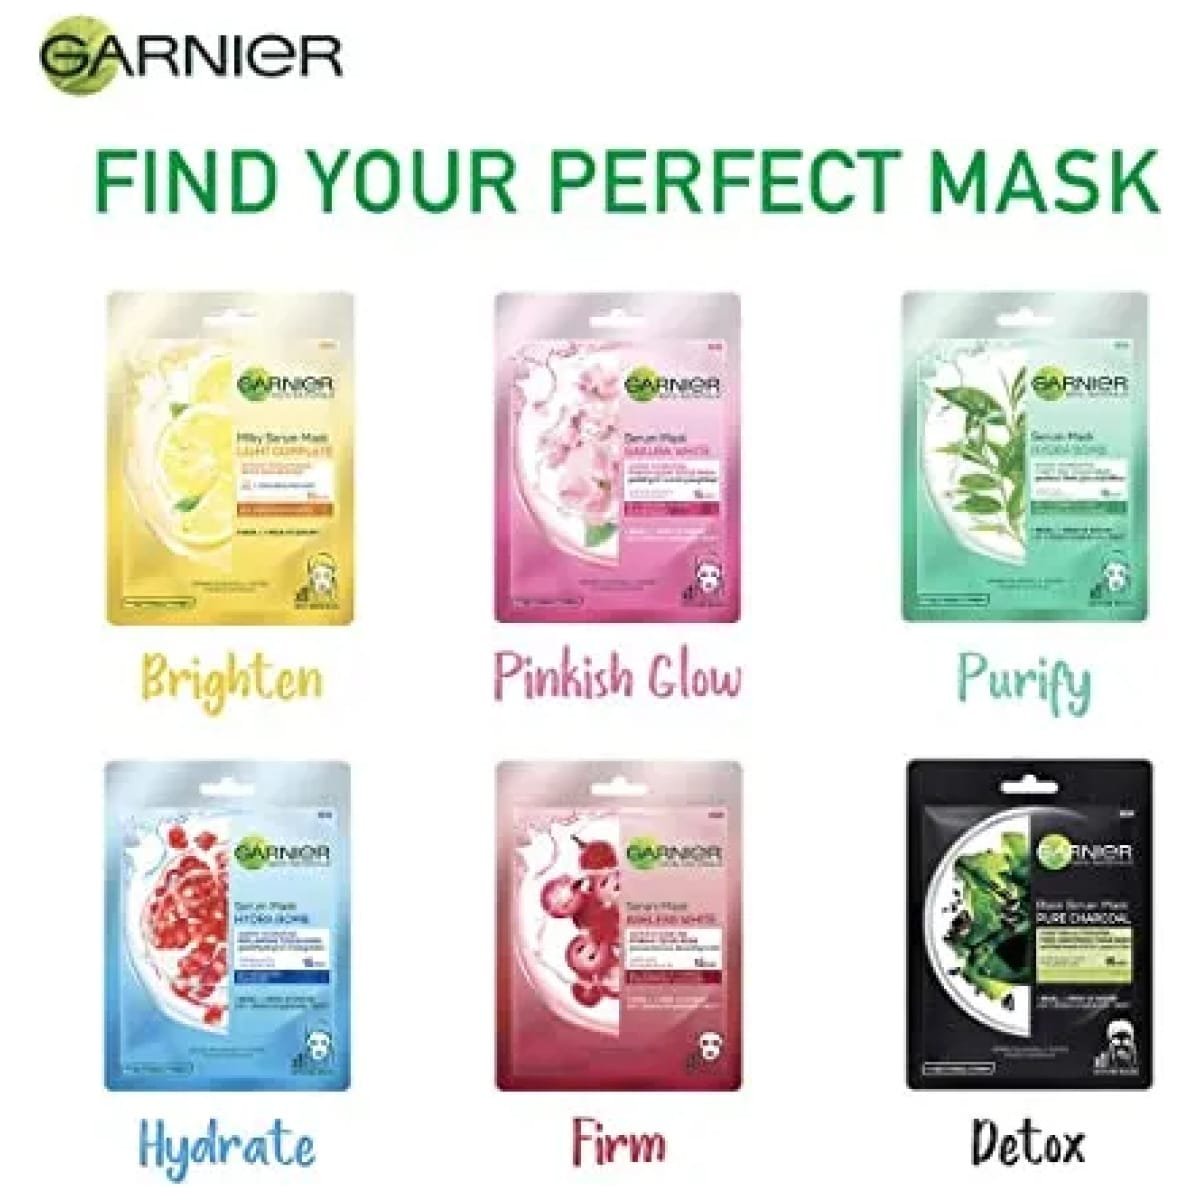 Garnier Pure Charcoal Black Serum Face Sheet Mask - Tightens Pores 28 g